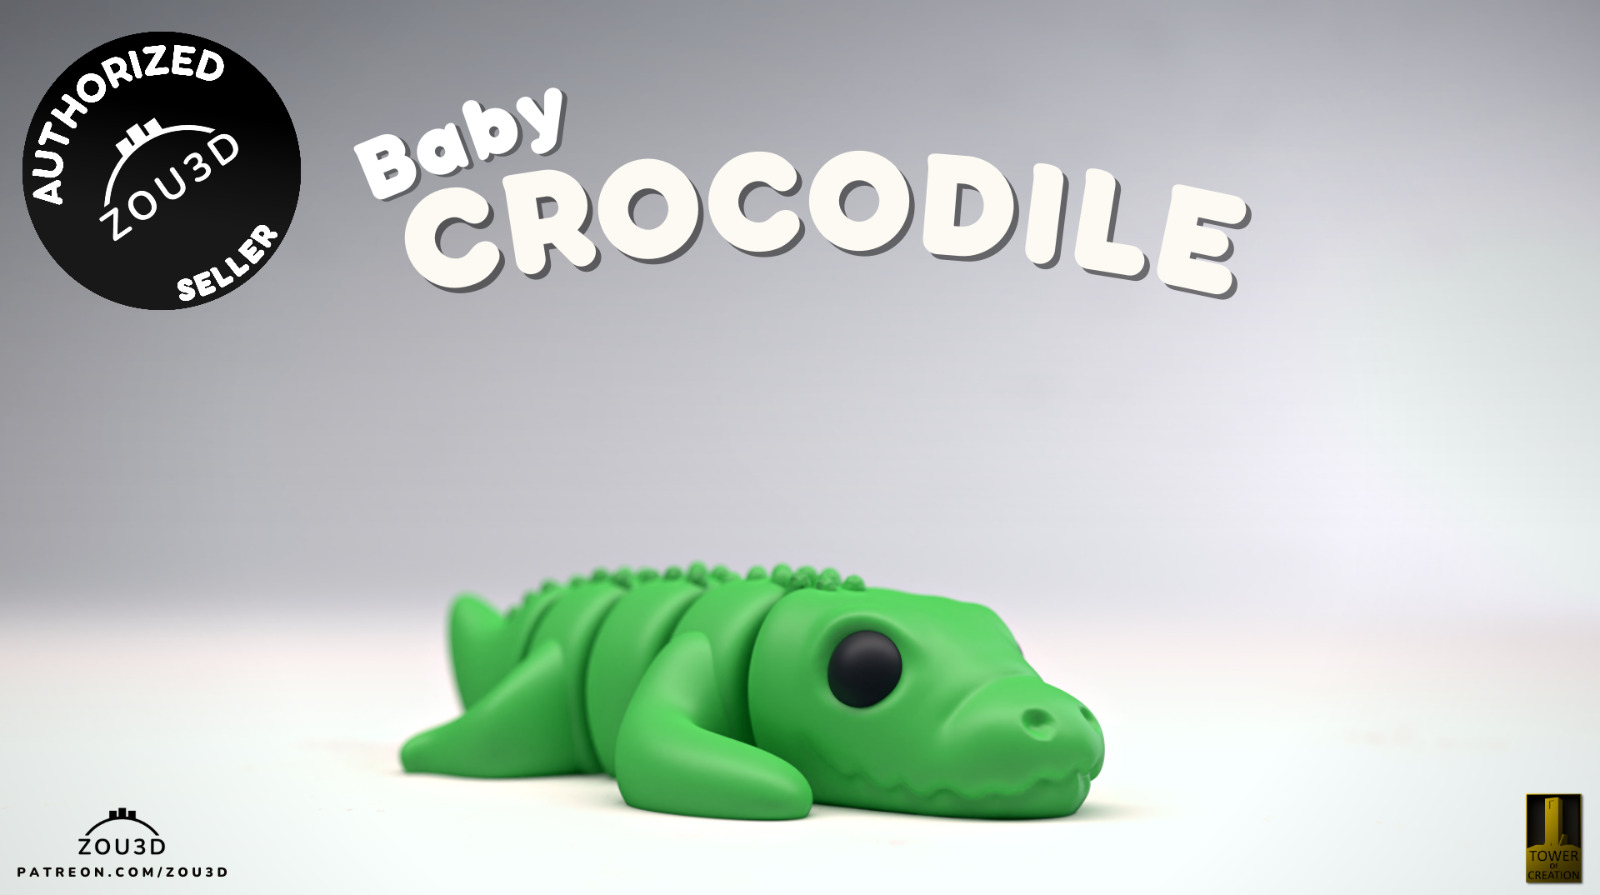 Cute 3d Printed Articulating Baby Crocodile by Zou3d/Desk Pet/Flex Fidget Toy